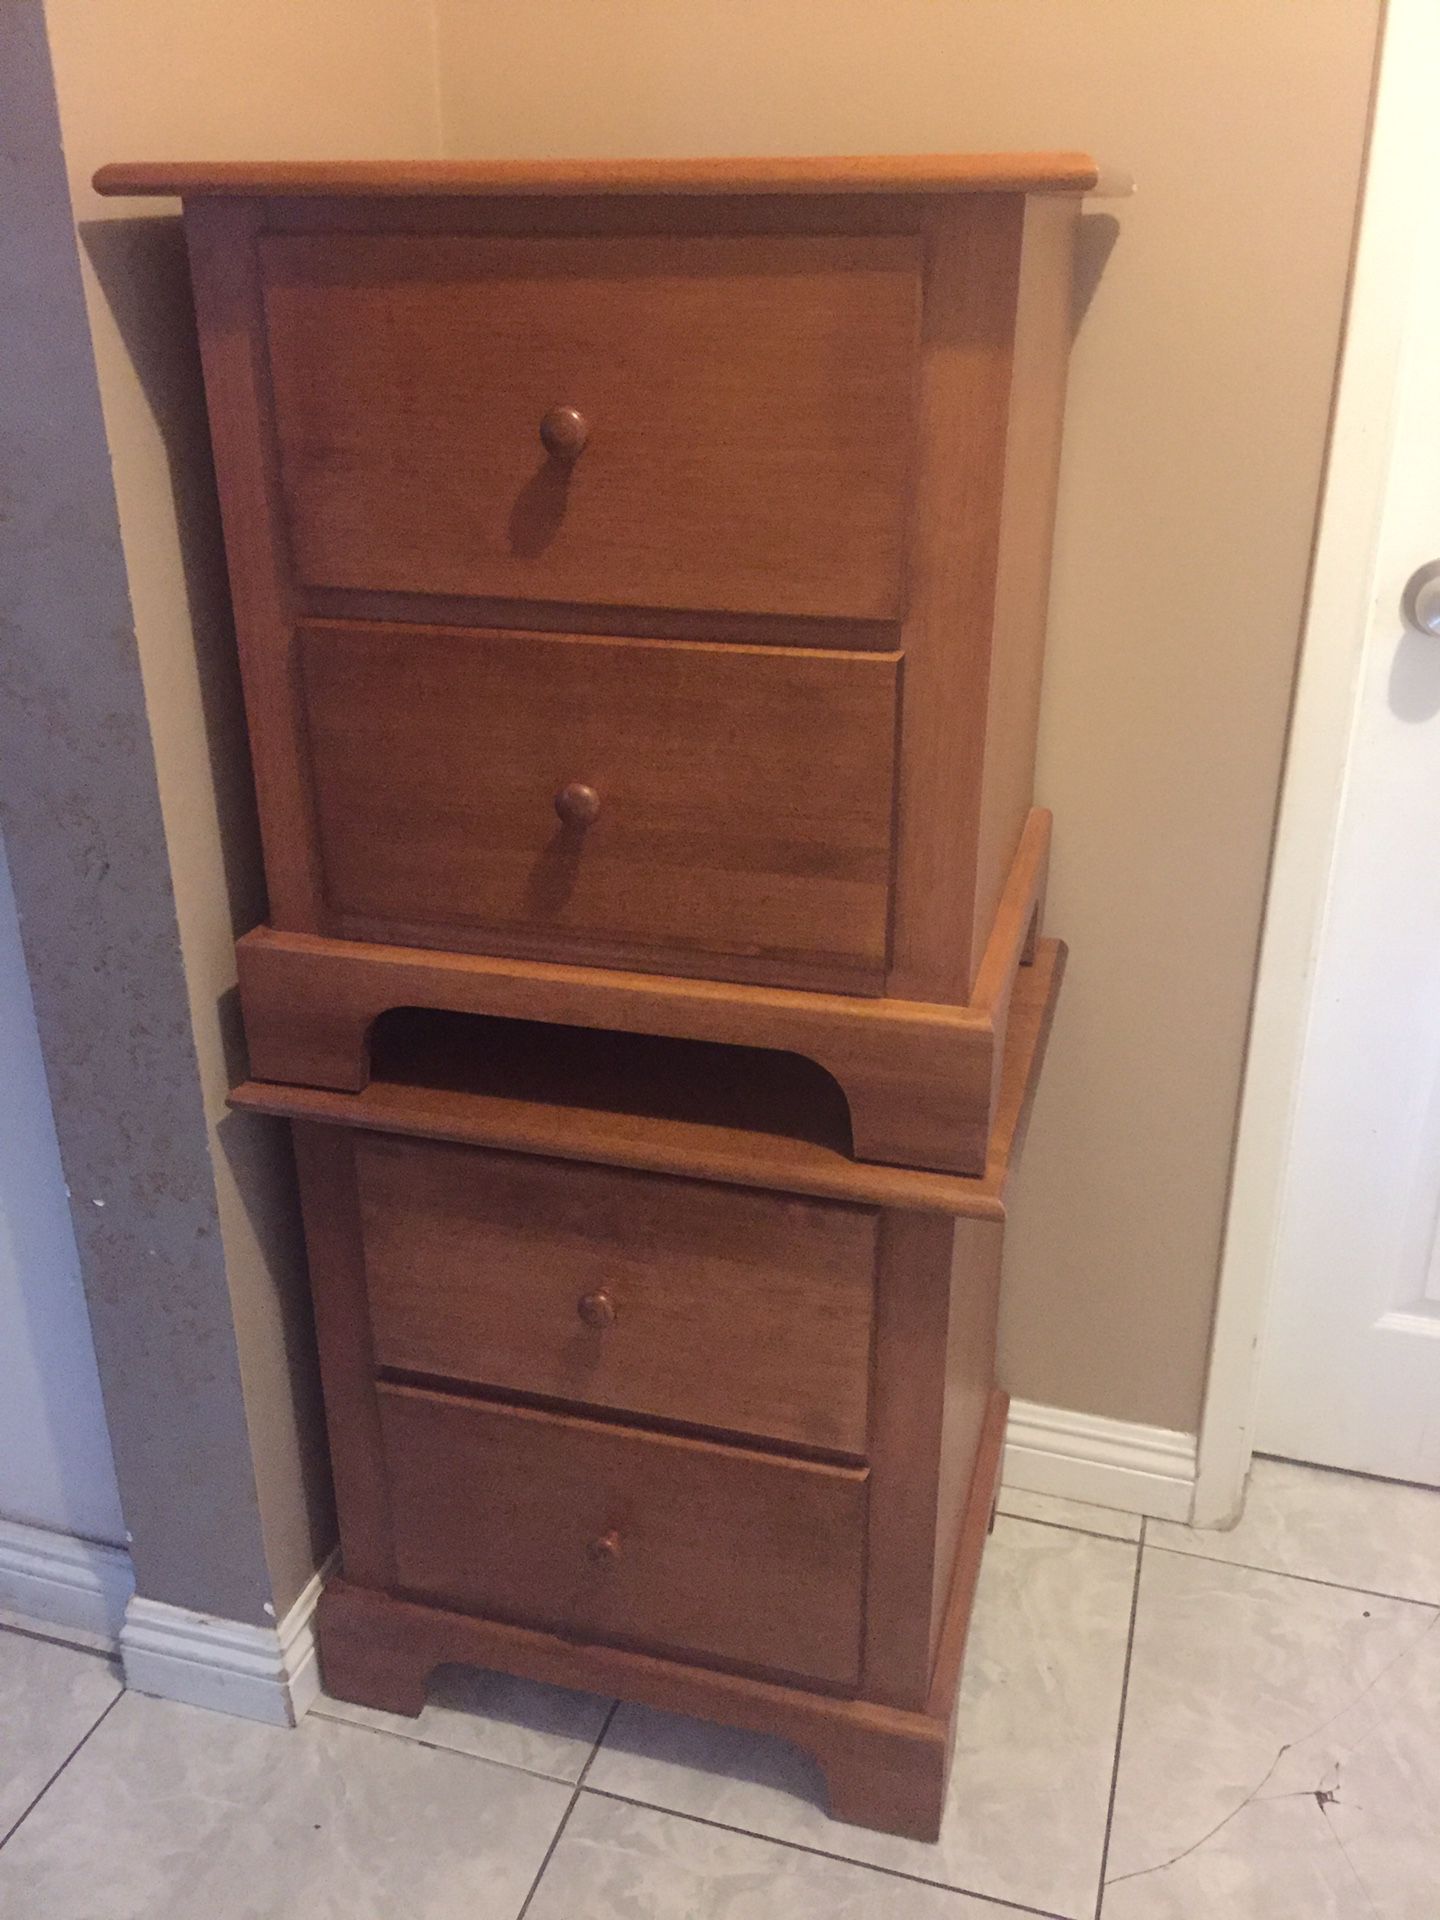 Wood bedside drawers